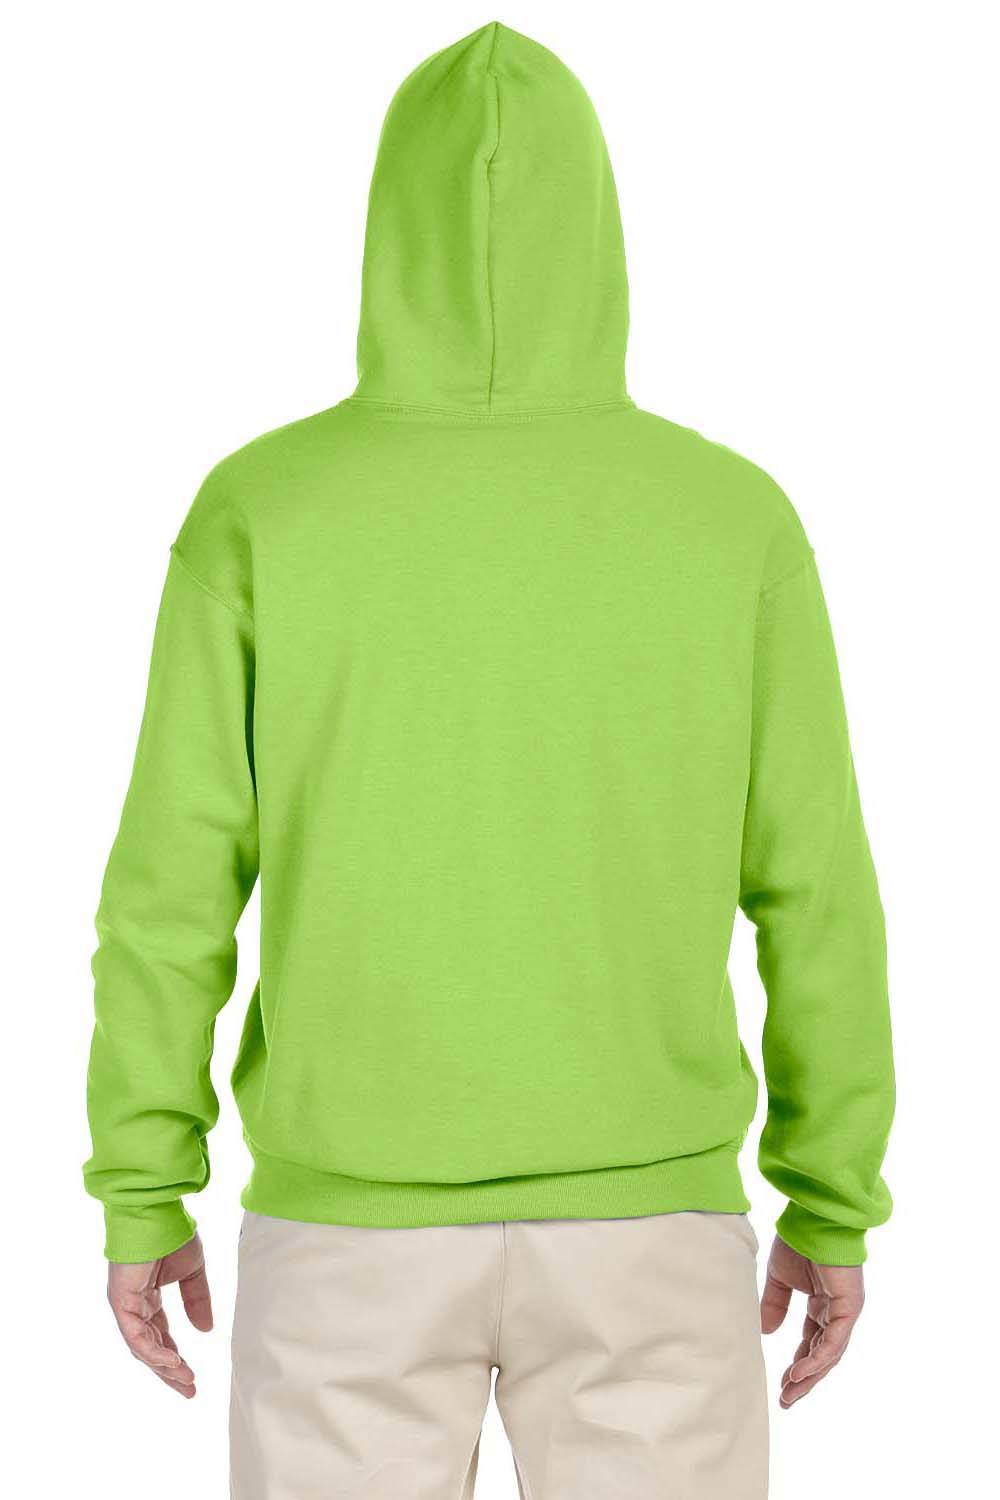 Jerzees 996 Mens NuBlend Fleece Hooded Sweatshirt Hoodie Neon Green Back